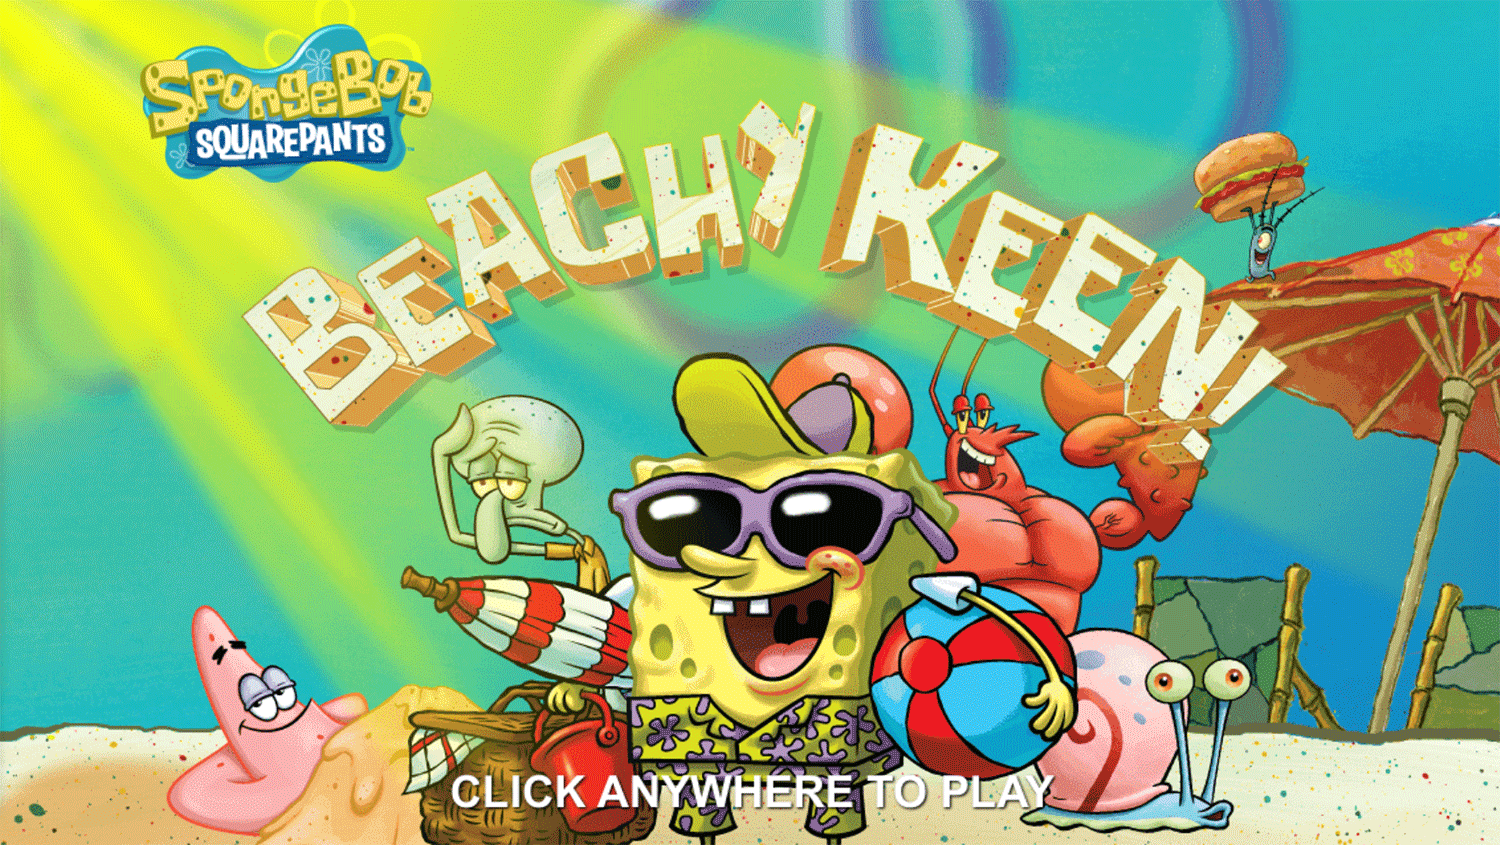 Spongebob Squarepants Beachy Keen Welcome Screen Screenshots.